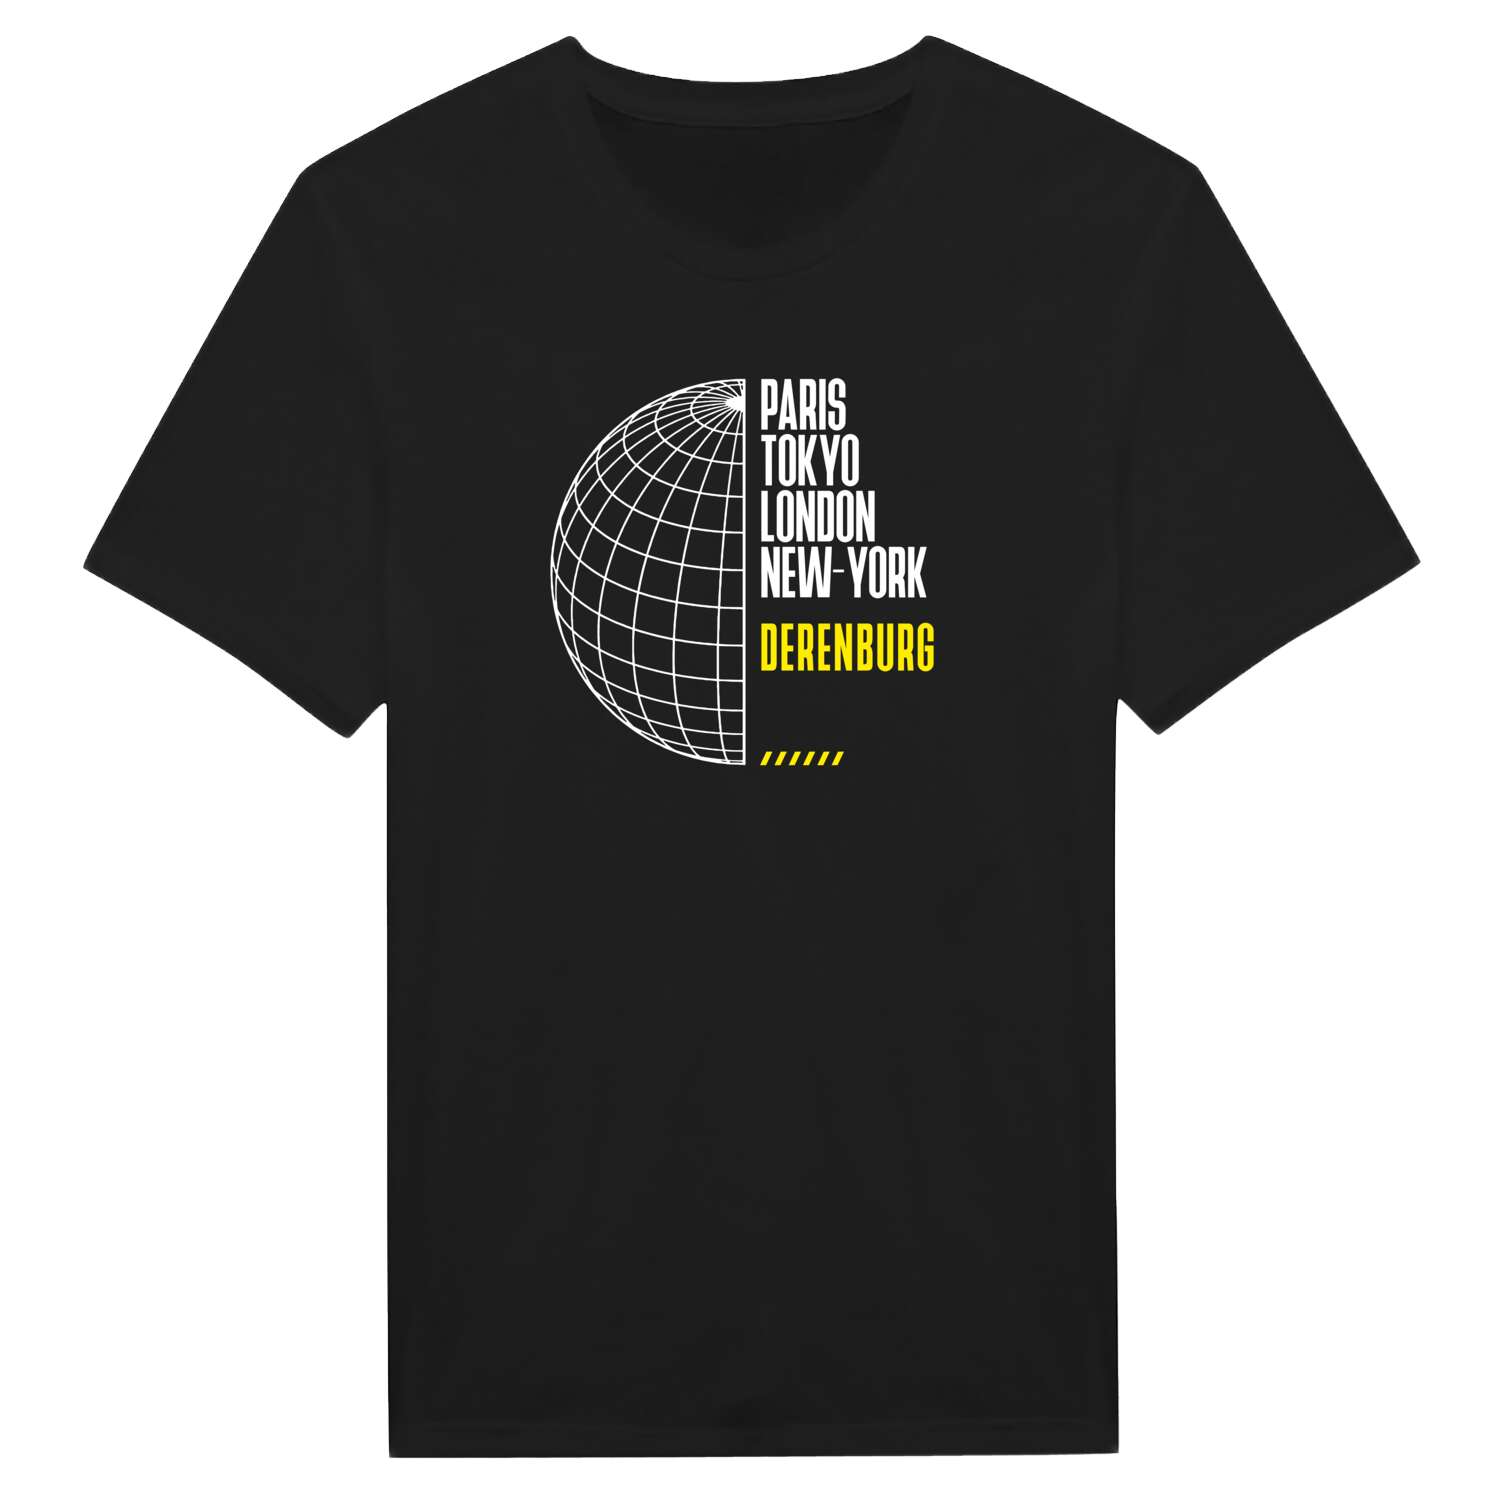 Derenburg T-Shirt »Paris Tokyo London«